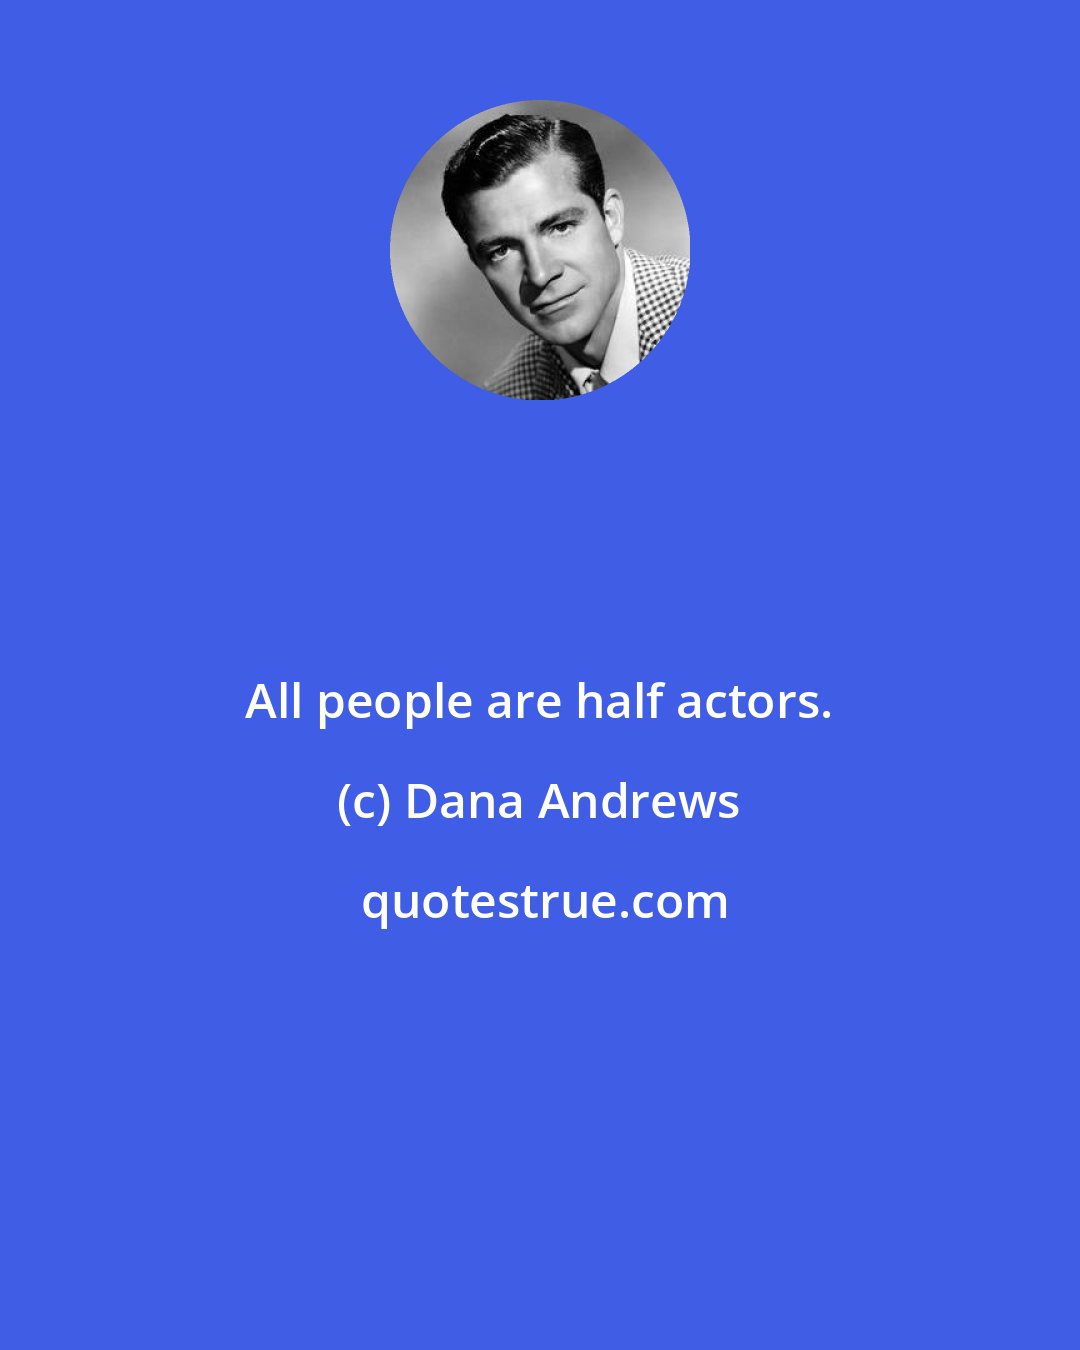 Dana Andrews: All people are half actors.